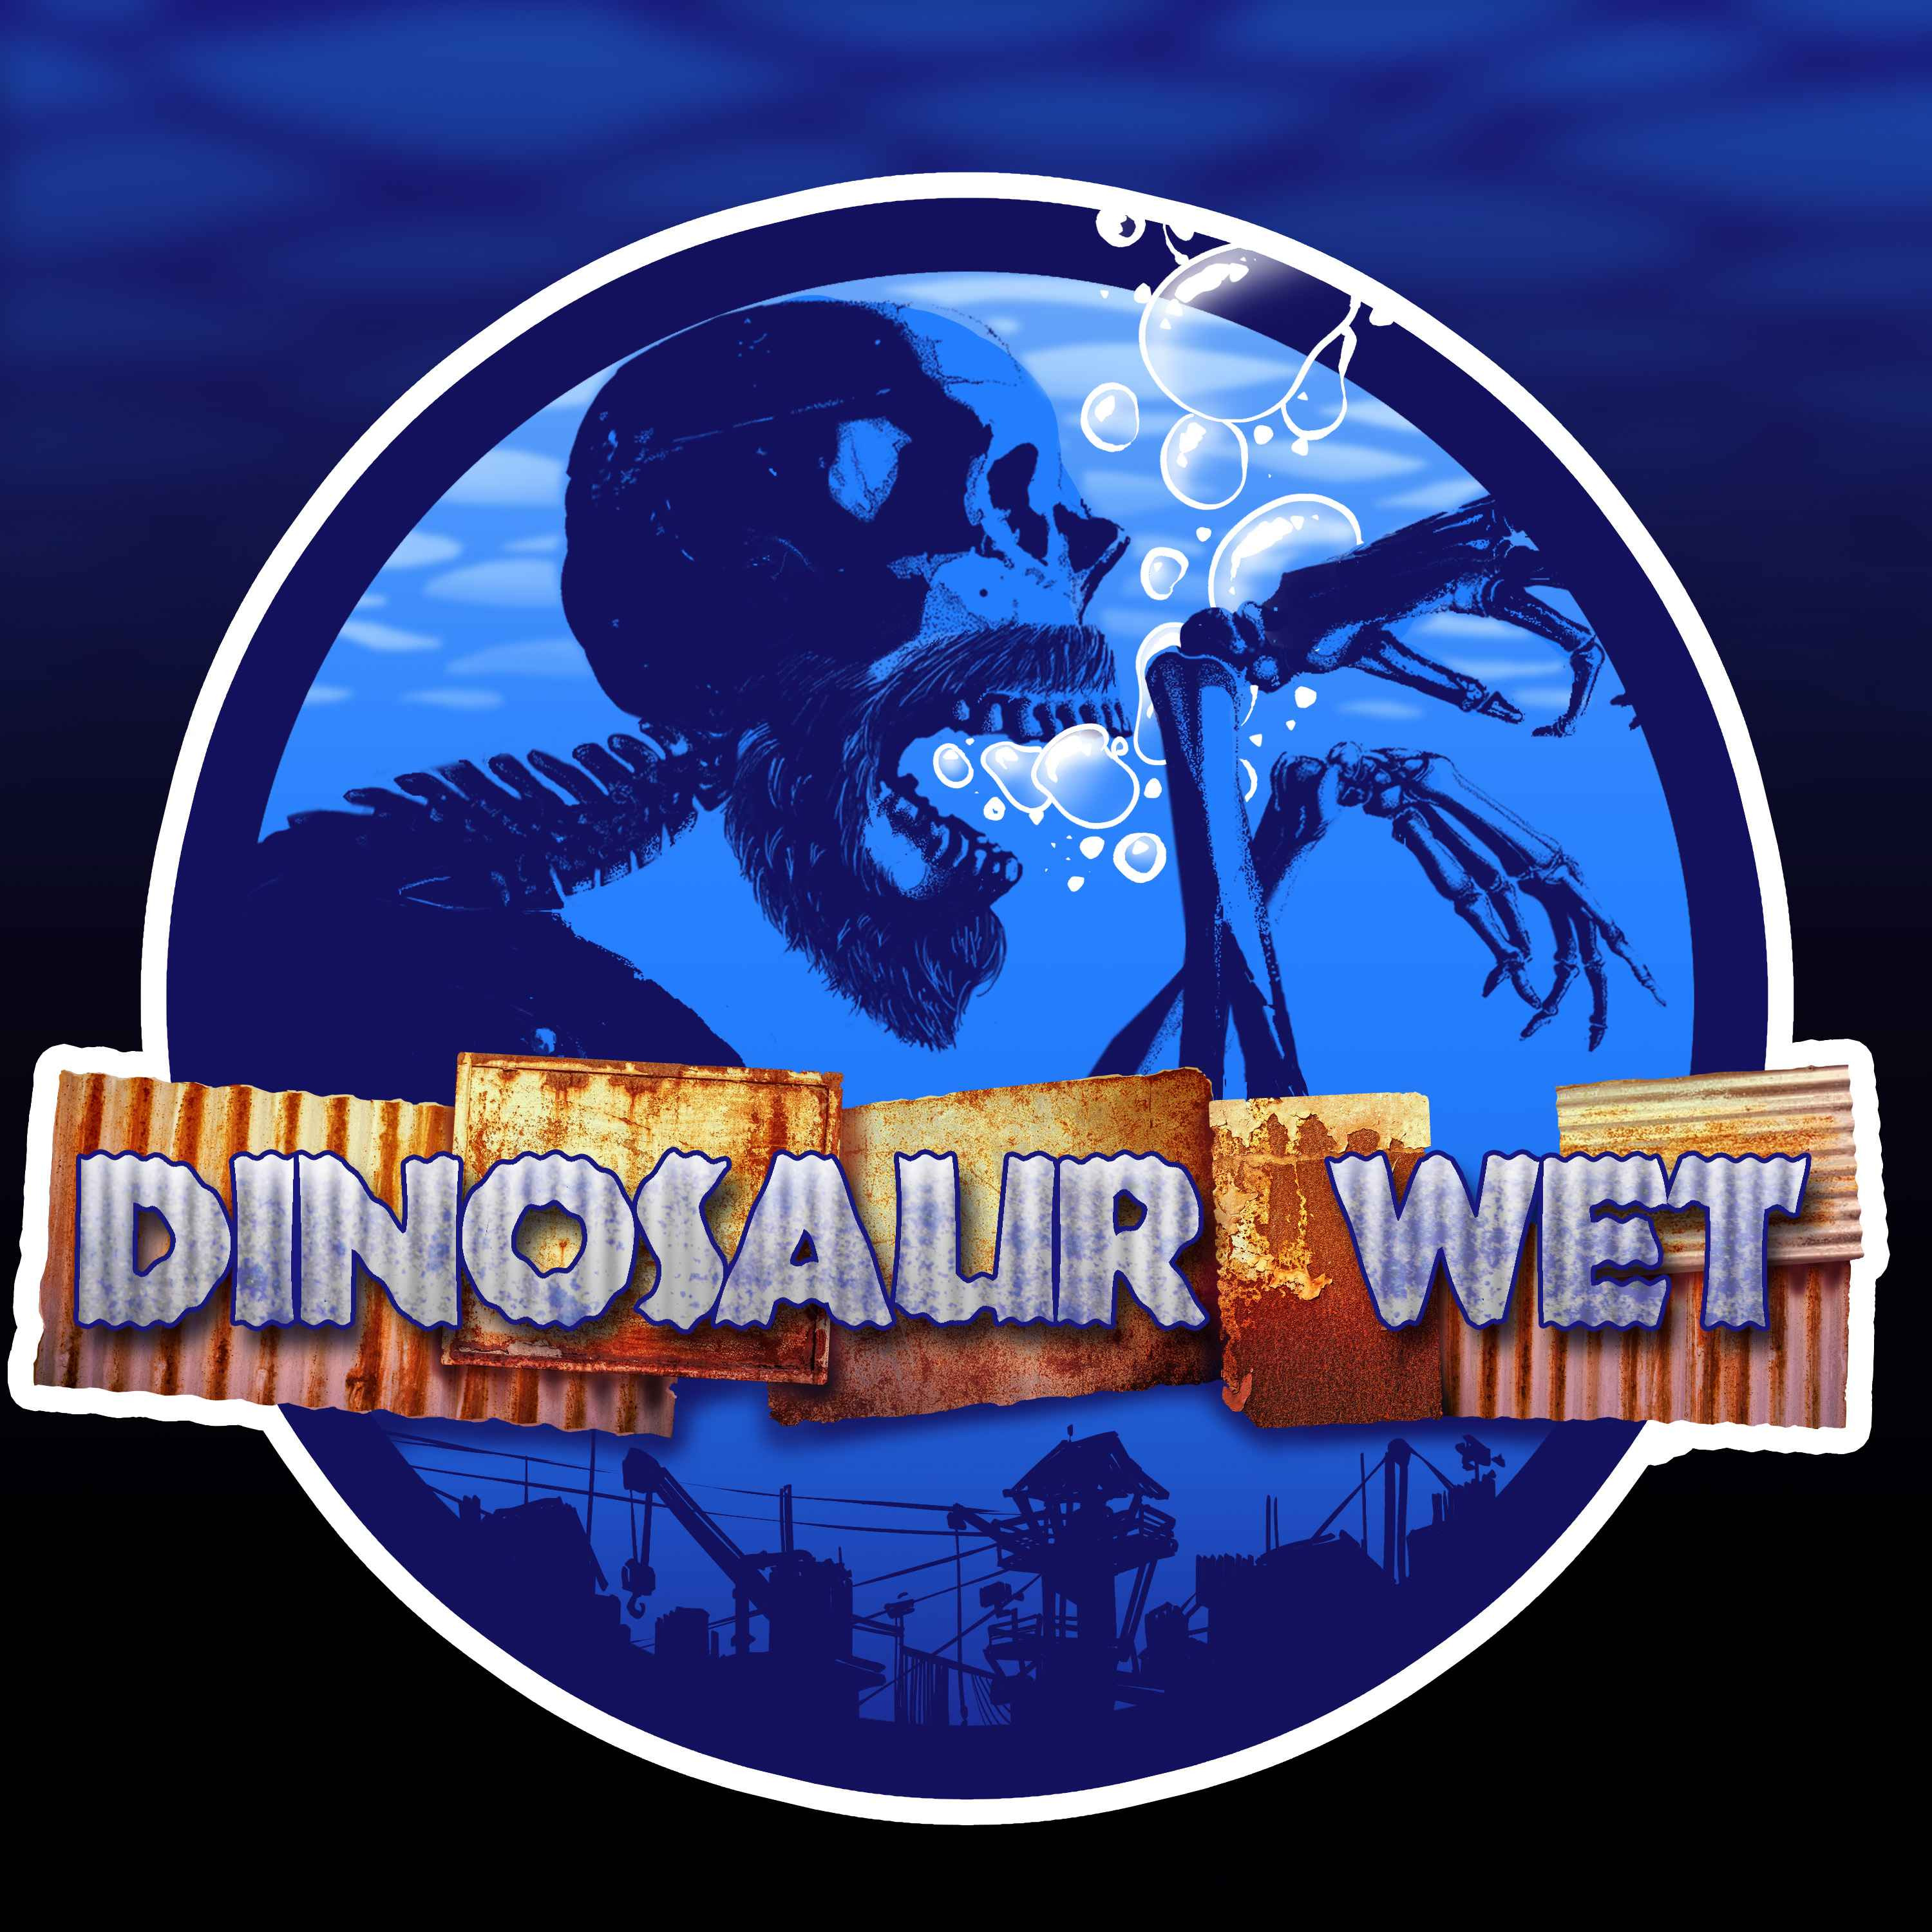 Dinosaur Wet Promo